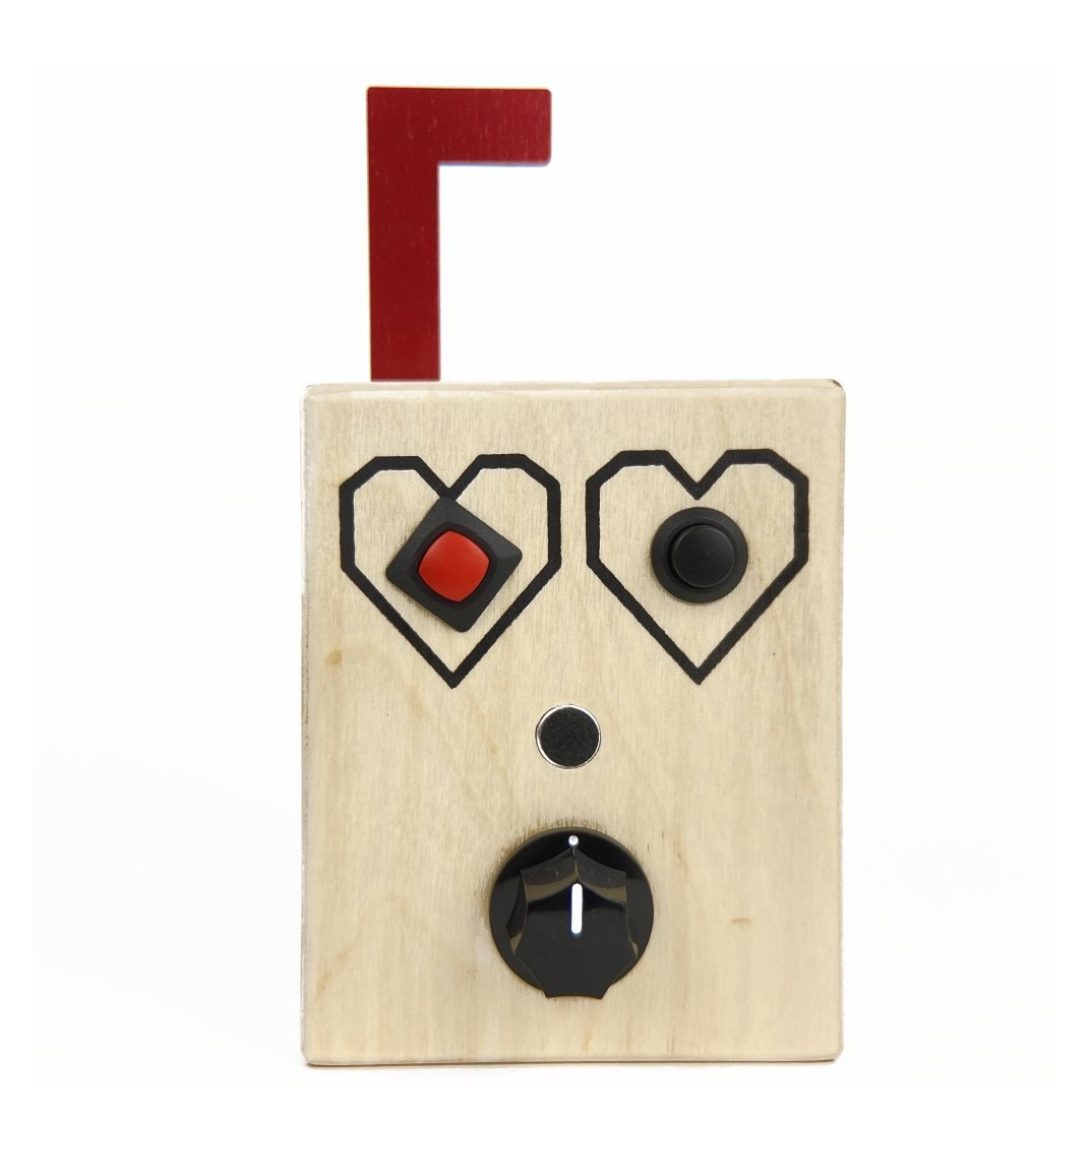 L'il Mib wooden handmade voice recorder